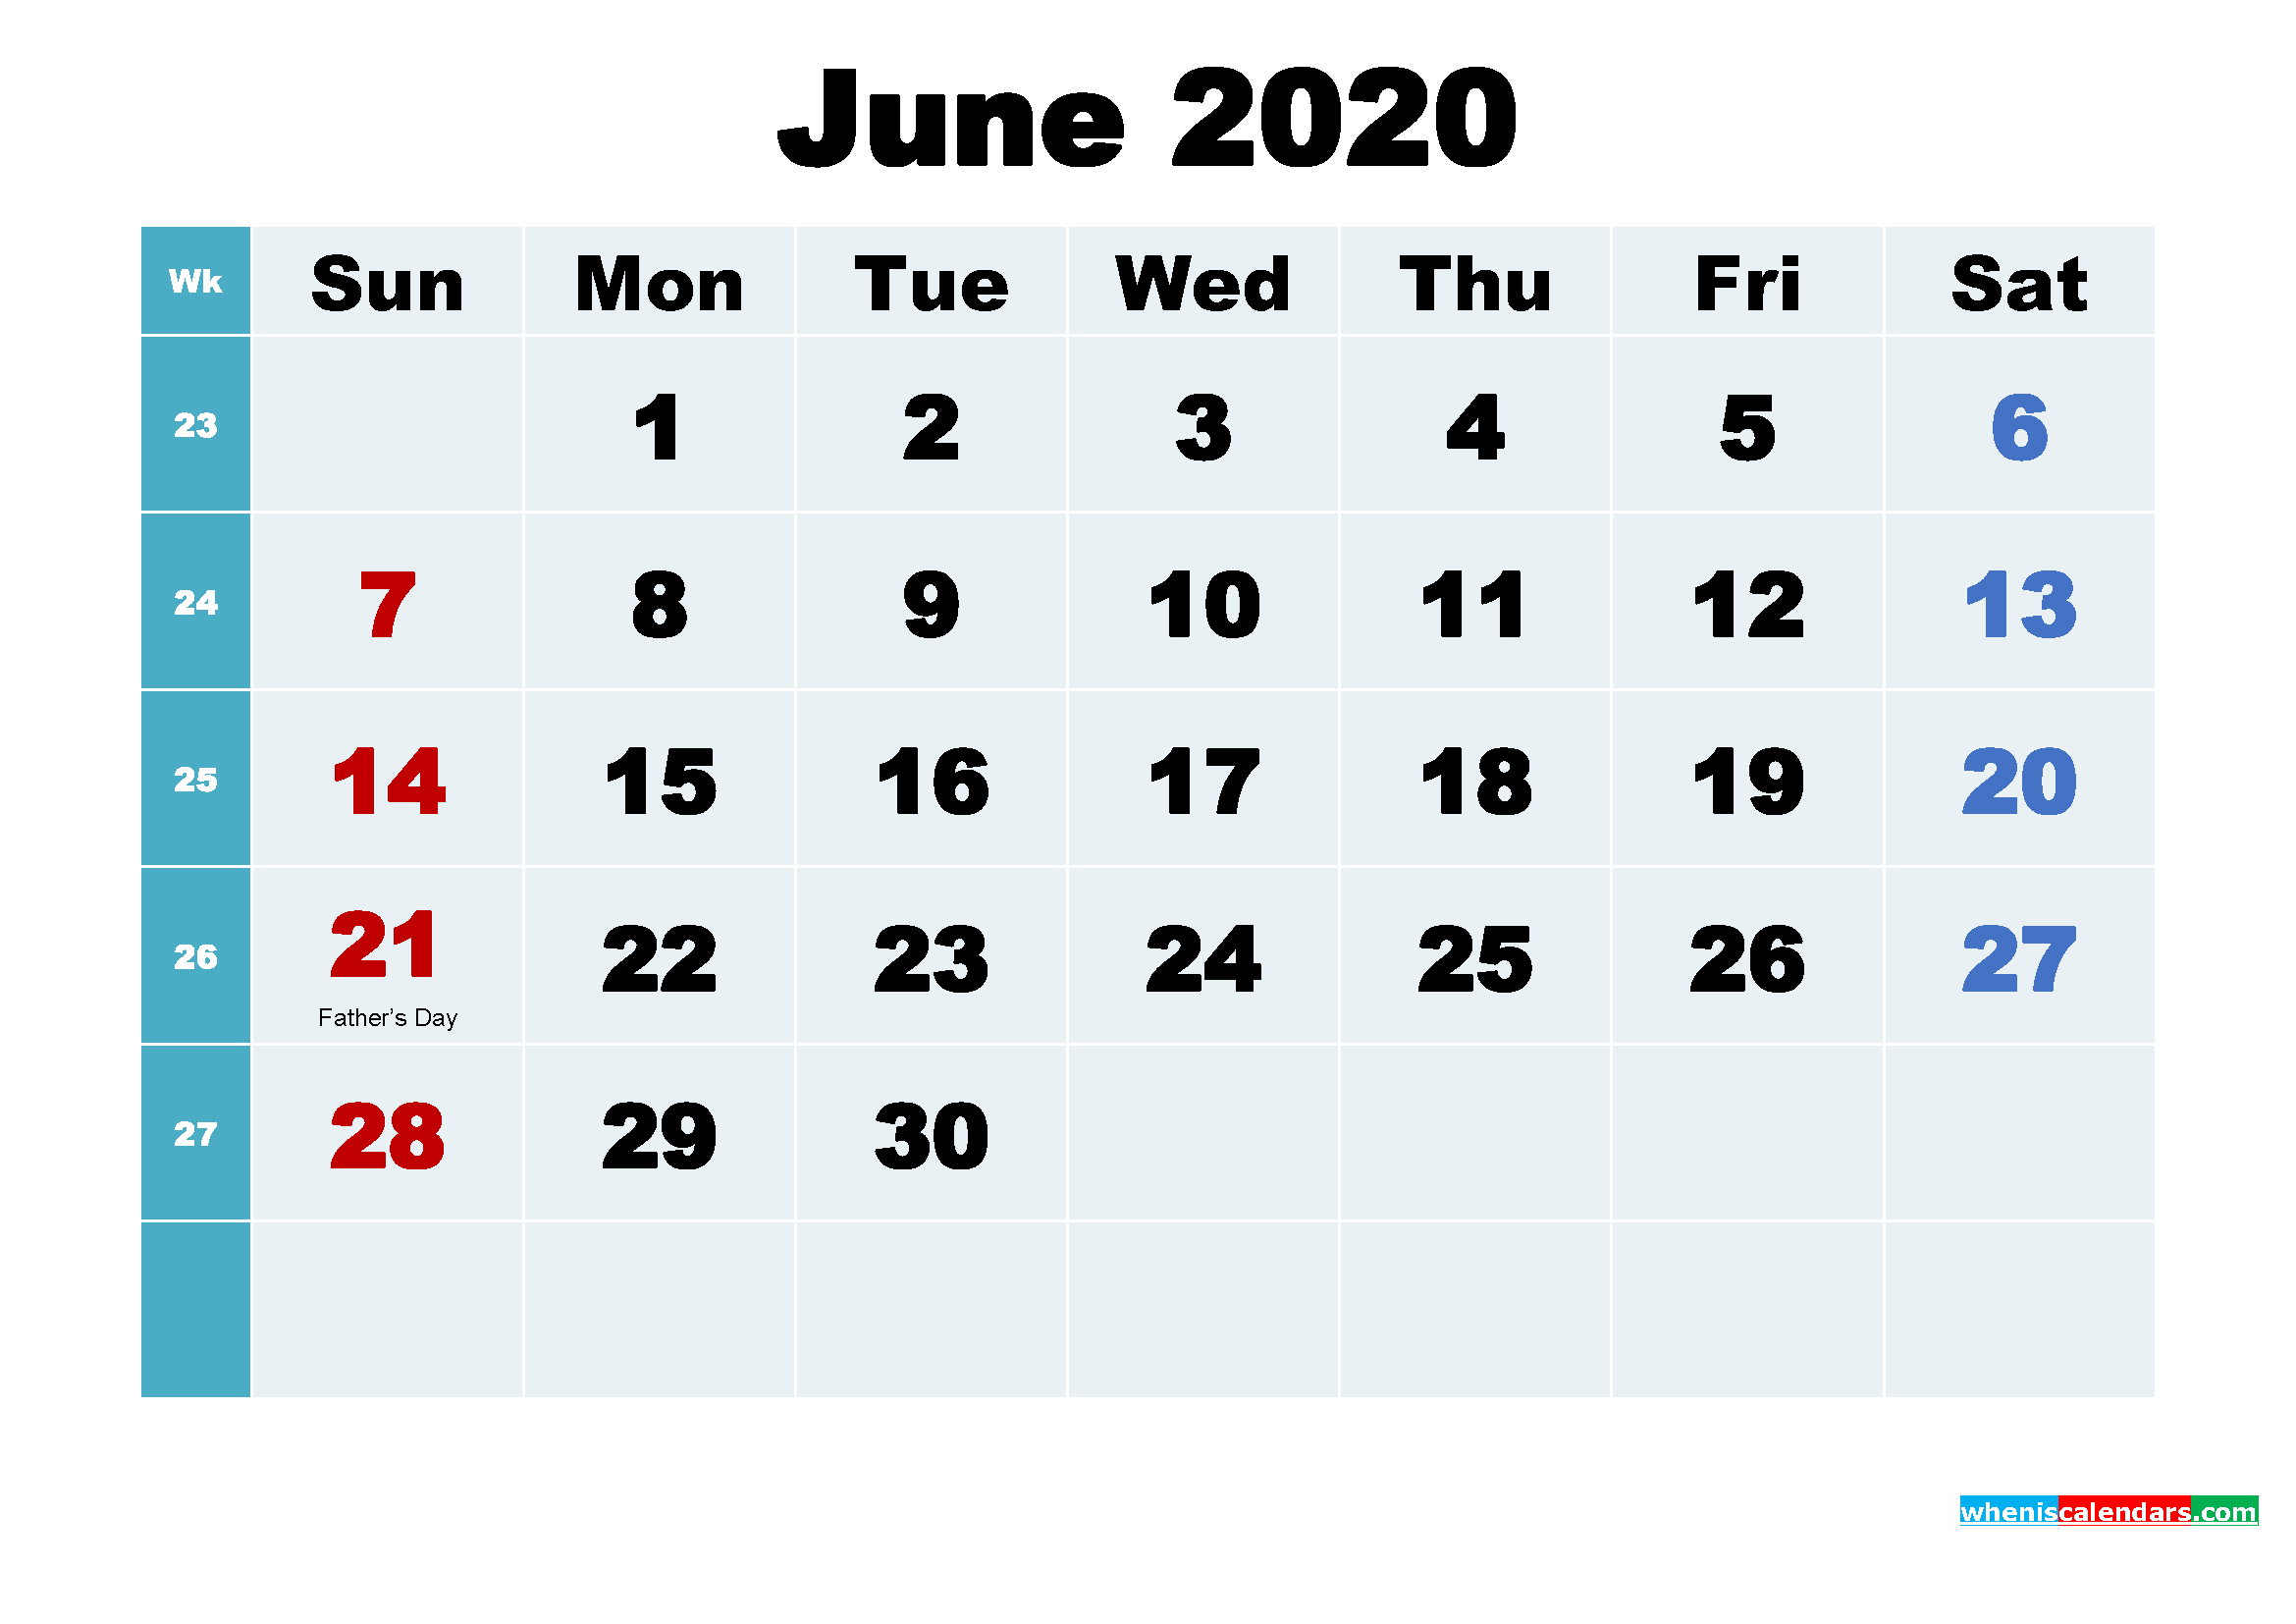 Free June 2020 Printable Calendar with Holidays